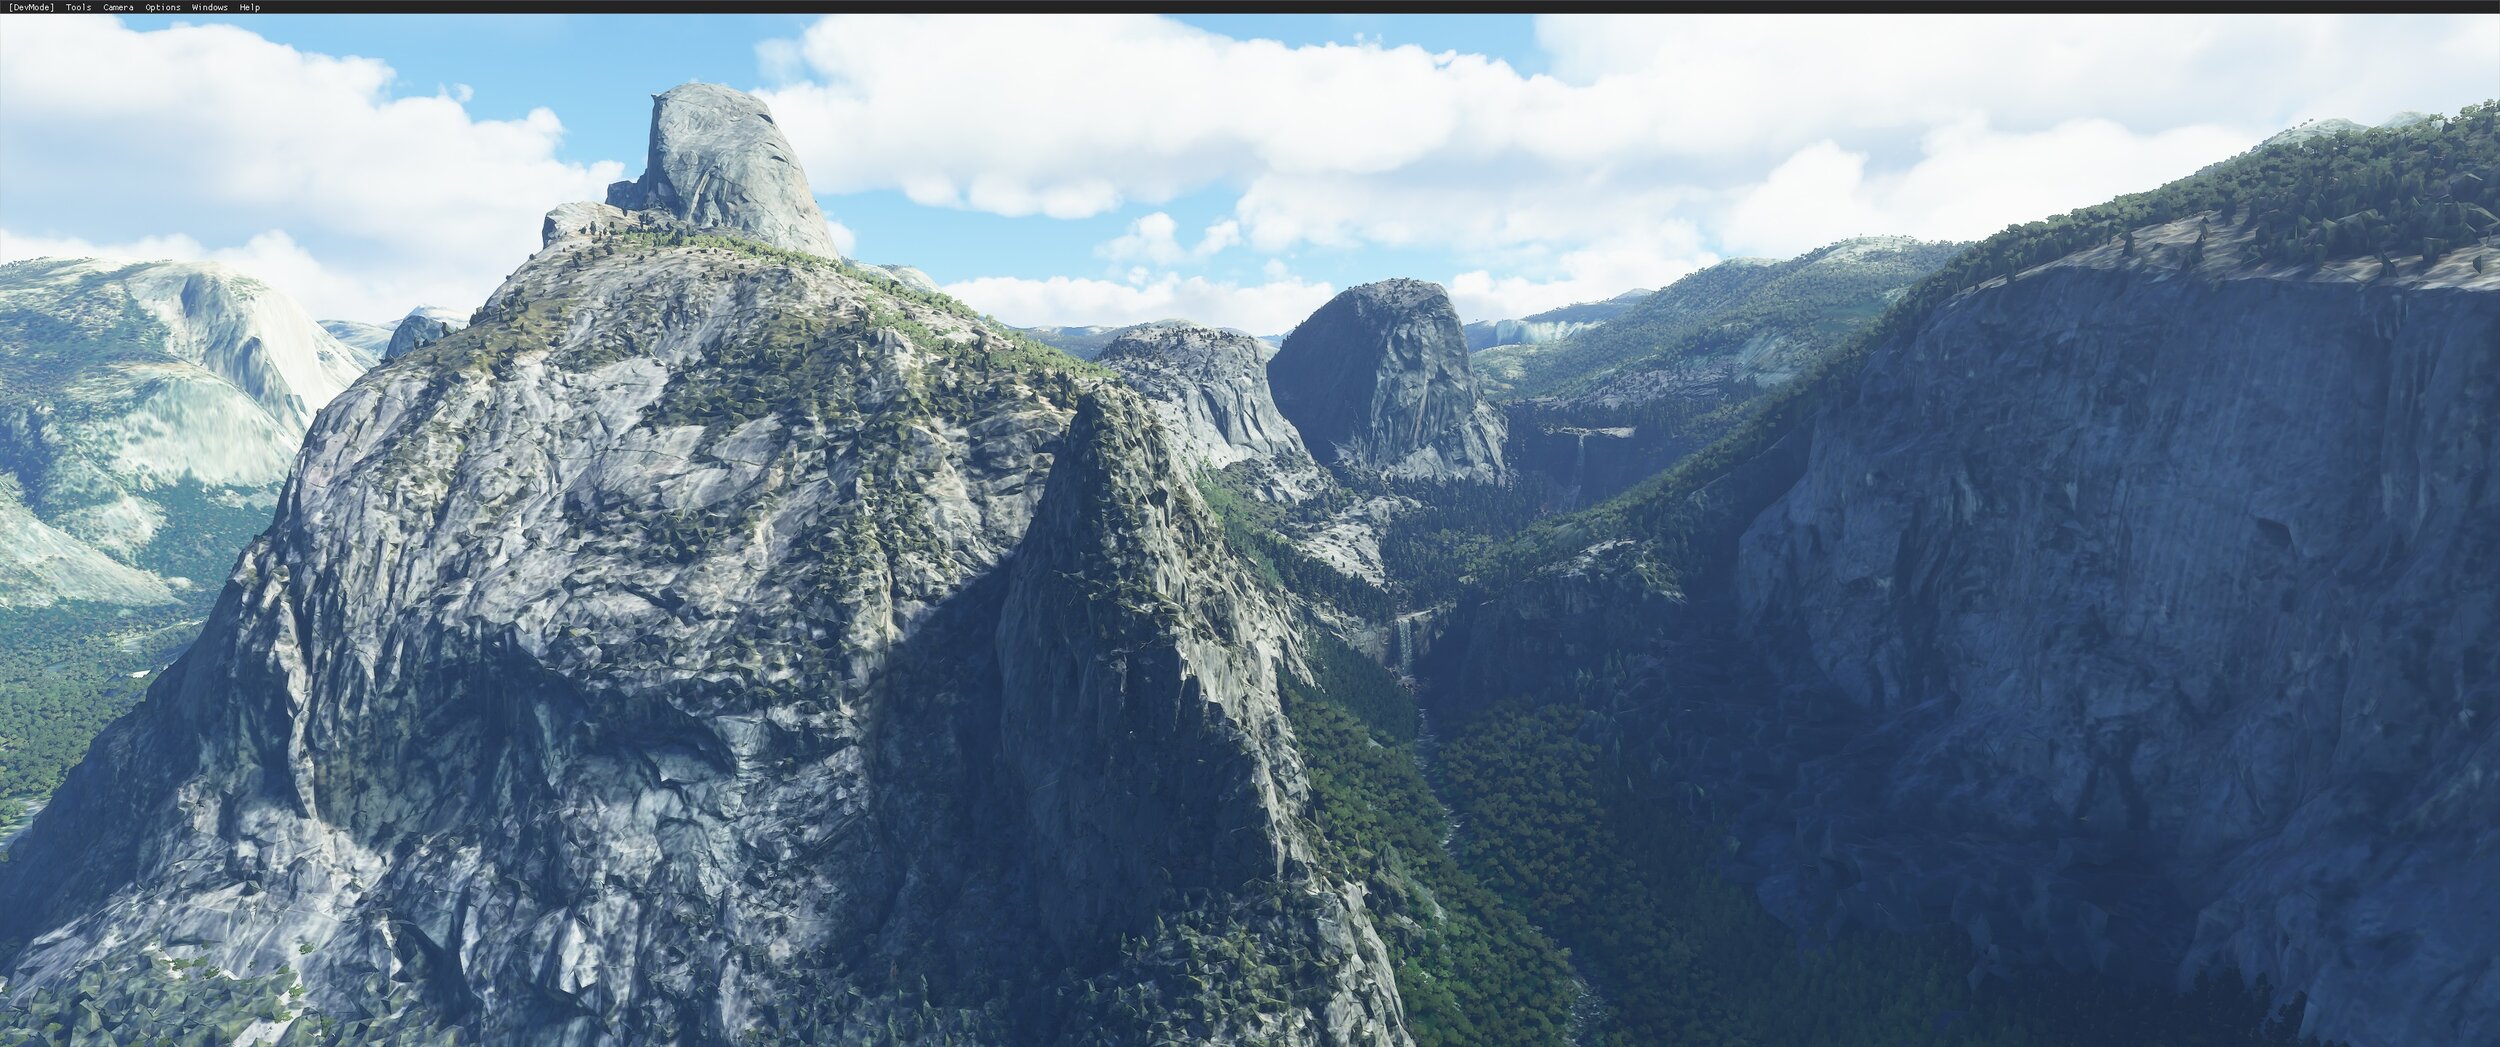 Yosemite_Valley2.jpg